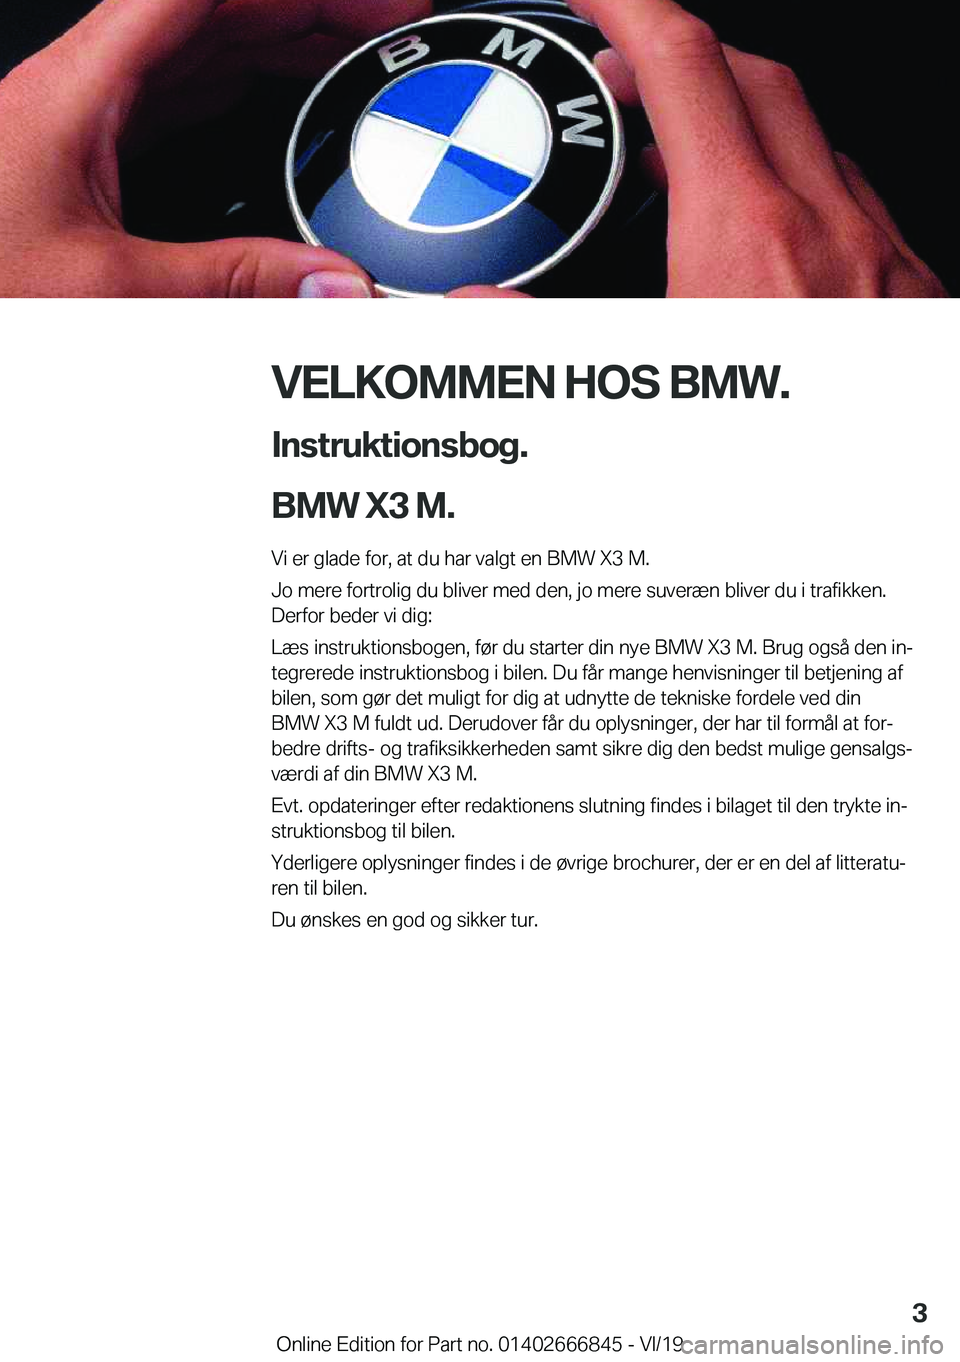 BMW X3 M 2020  InstruktionsbØger (in Danish) �V�E�L�K�O�M�M�E�N��H�O�S��B�M�W�.
�I�n�s�t�r�u�k�t�i�o�n�s�b�o�g�.
�B�M�W��X�3��M�. �V�i��e�r��g�l�a�d�e��f�o�r�,��a�t��d�u��h�a�r��v�a�l�g�t��e�n��B�M�W��X�3��M�.
�J�o��m�e�r�e��f�o